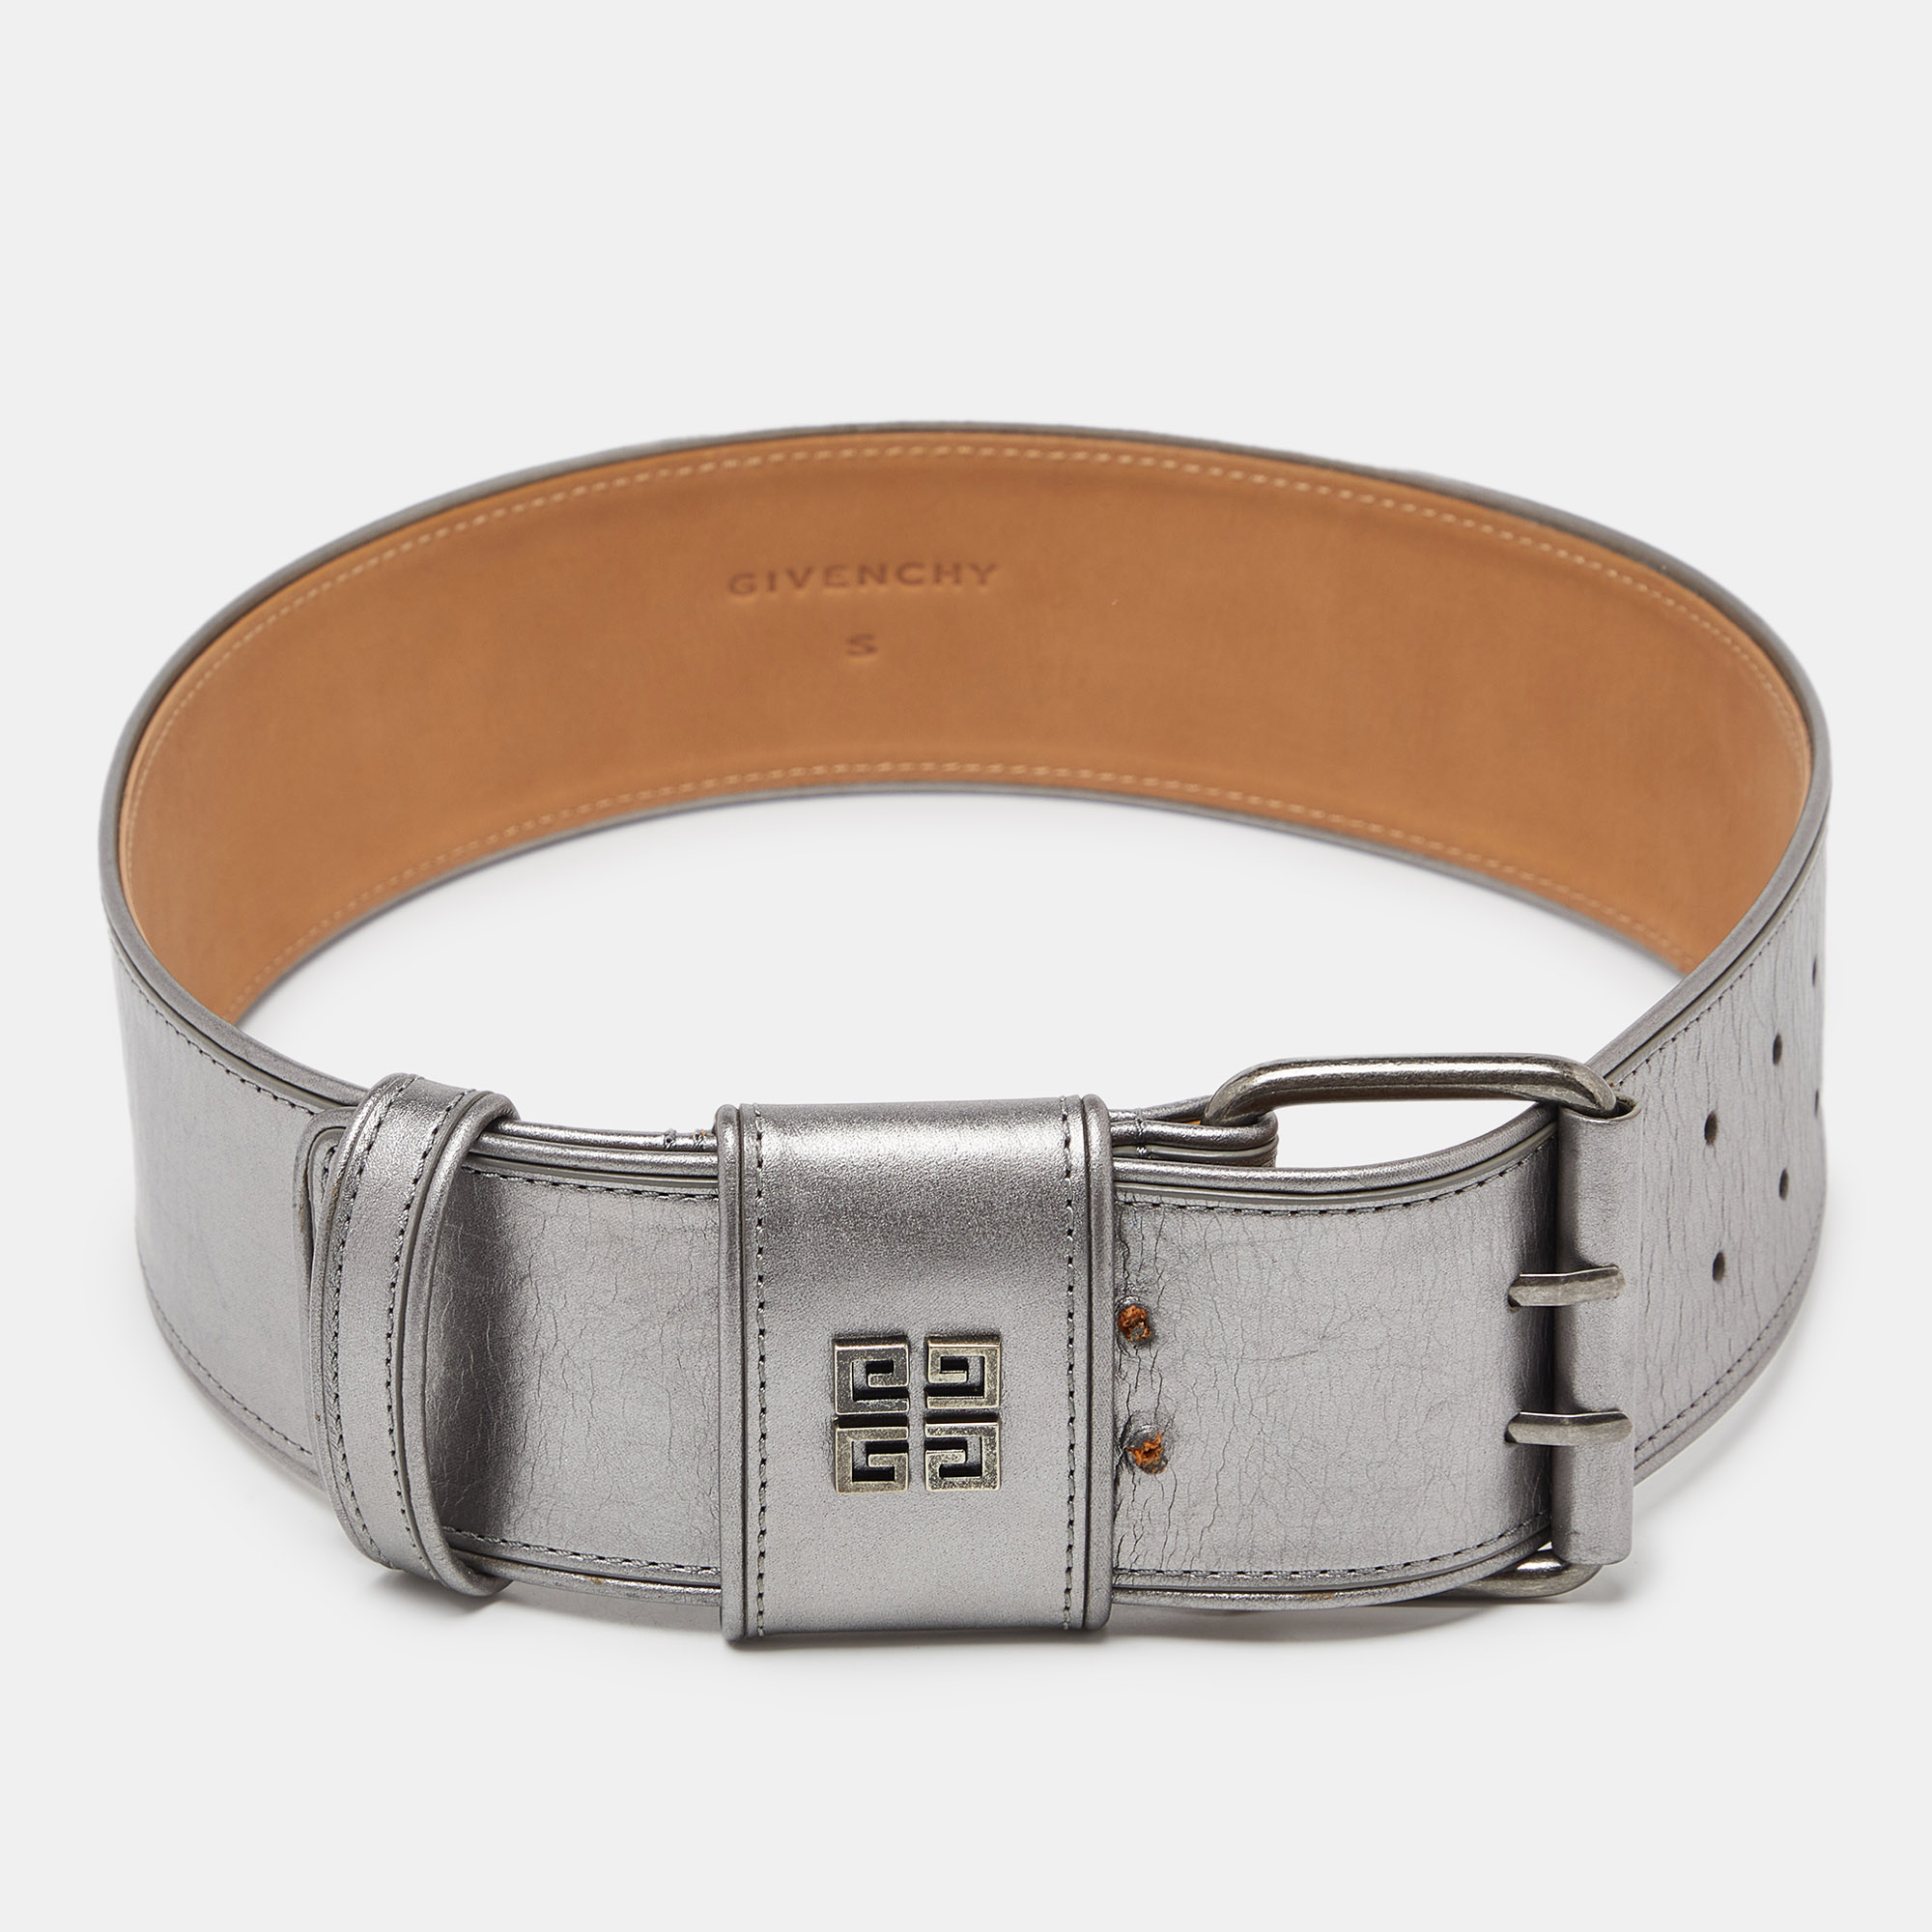 

Givenchy Metallic Grey Leather Wide Waist Belt S